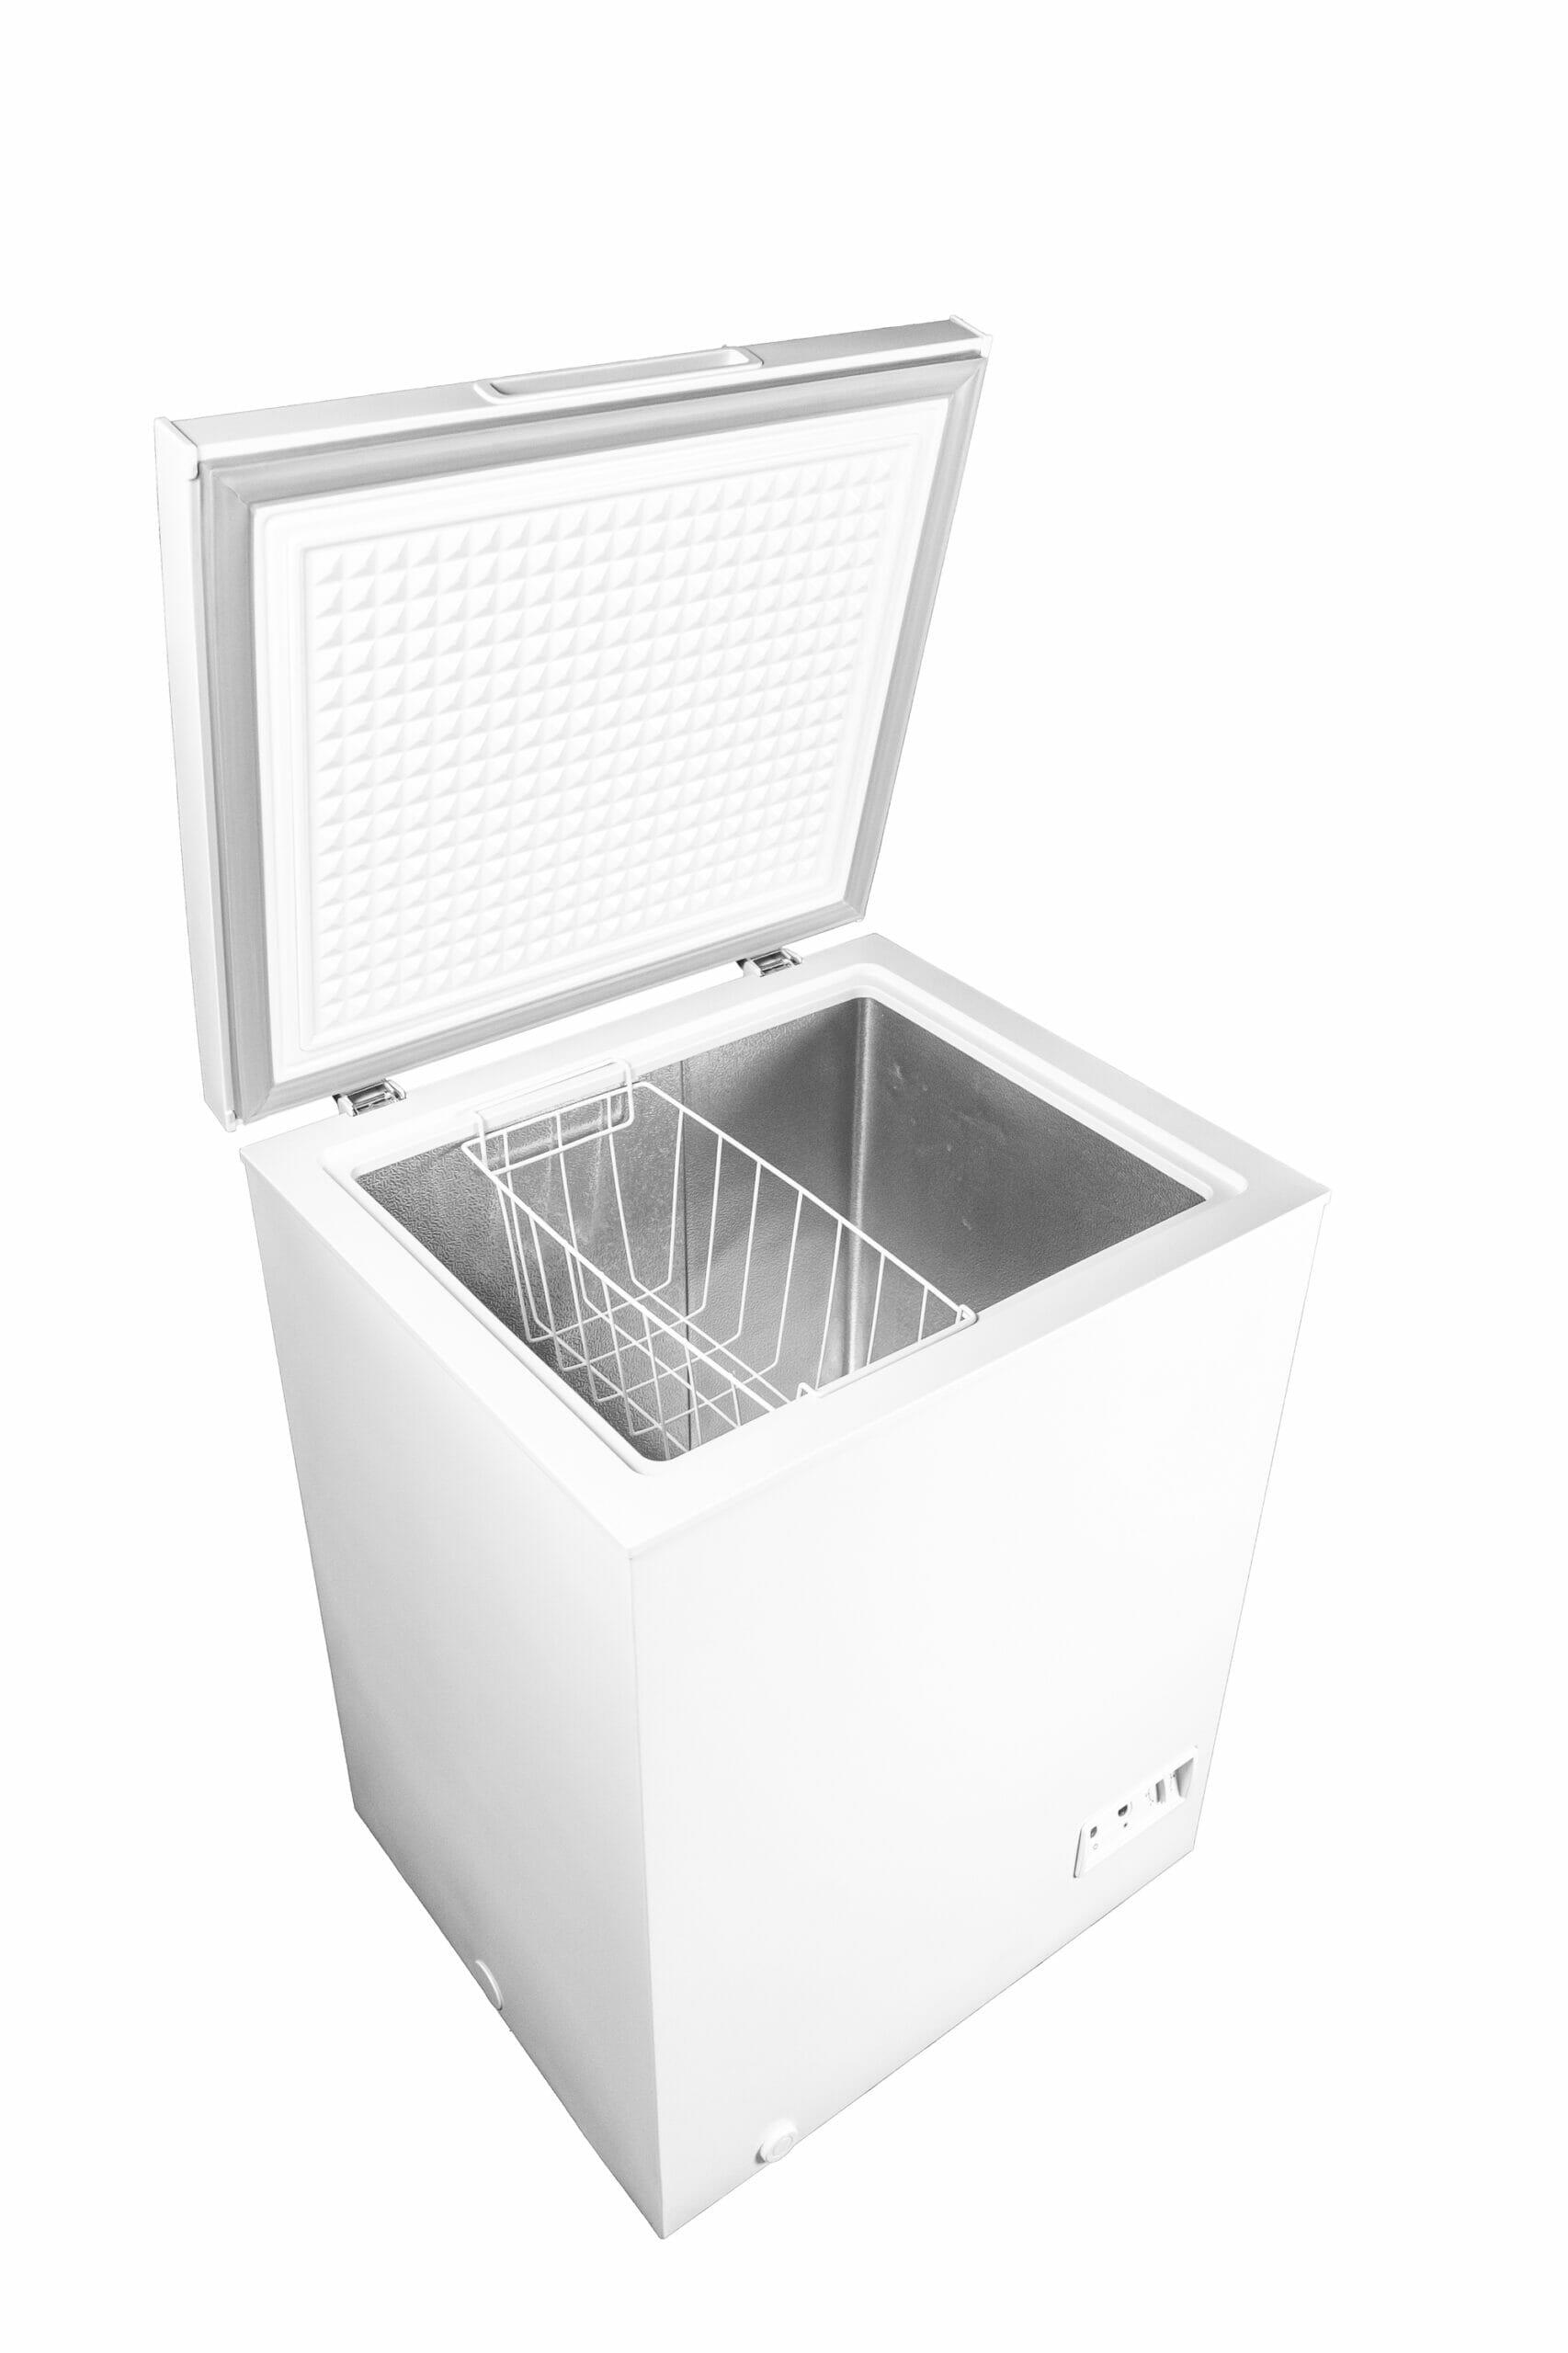 Danby 5.0 cu. ft. Square Model Chest Freezer DOE